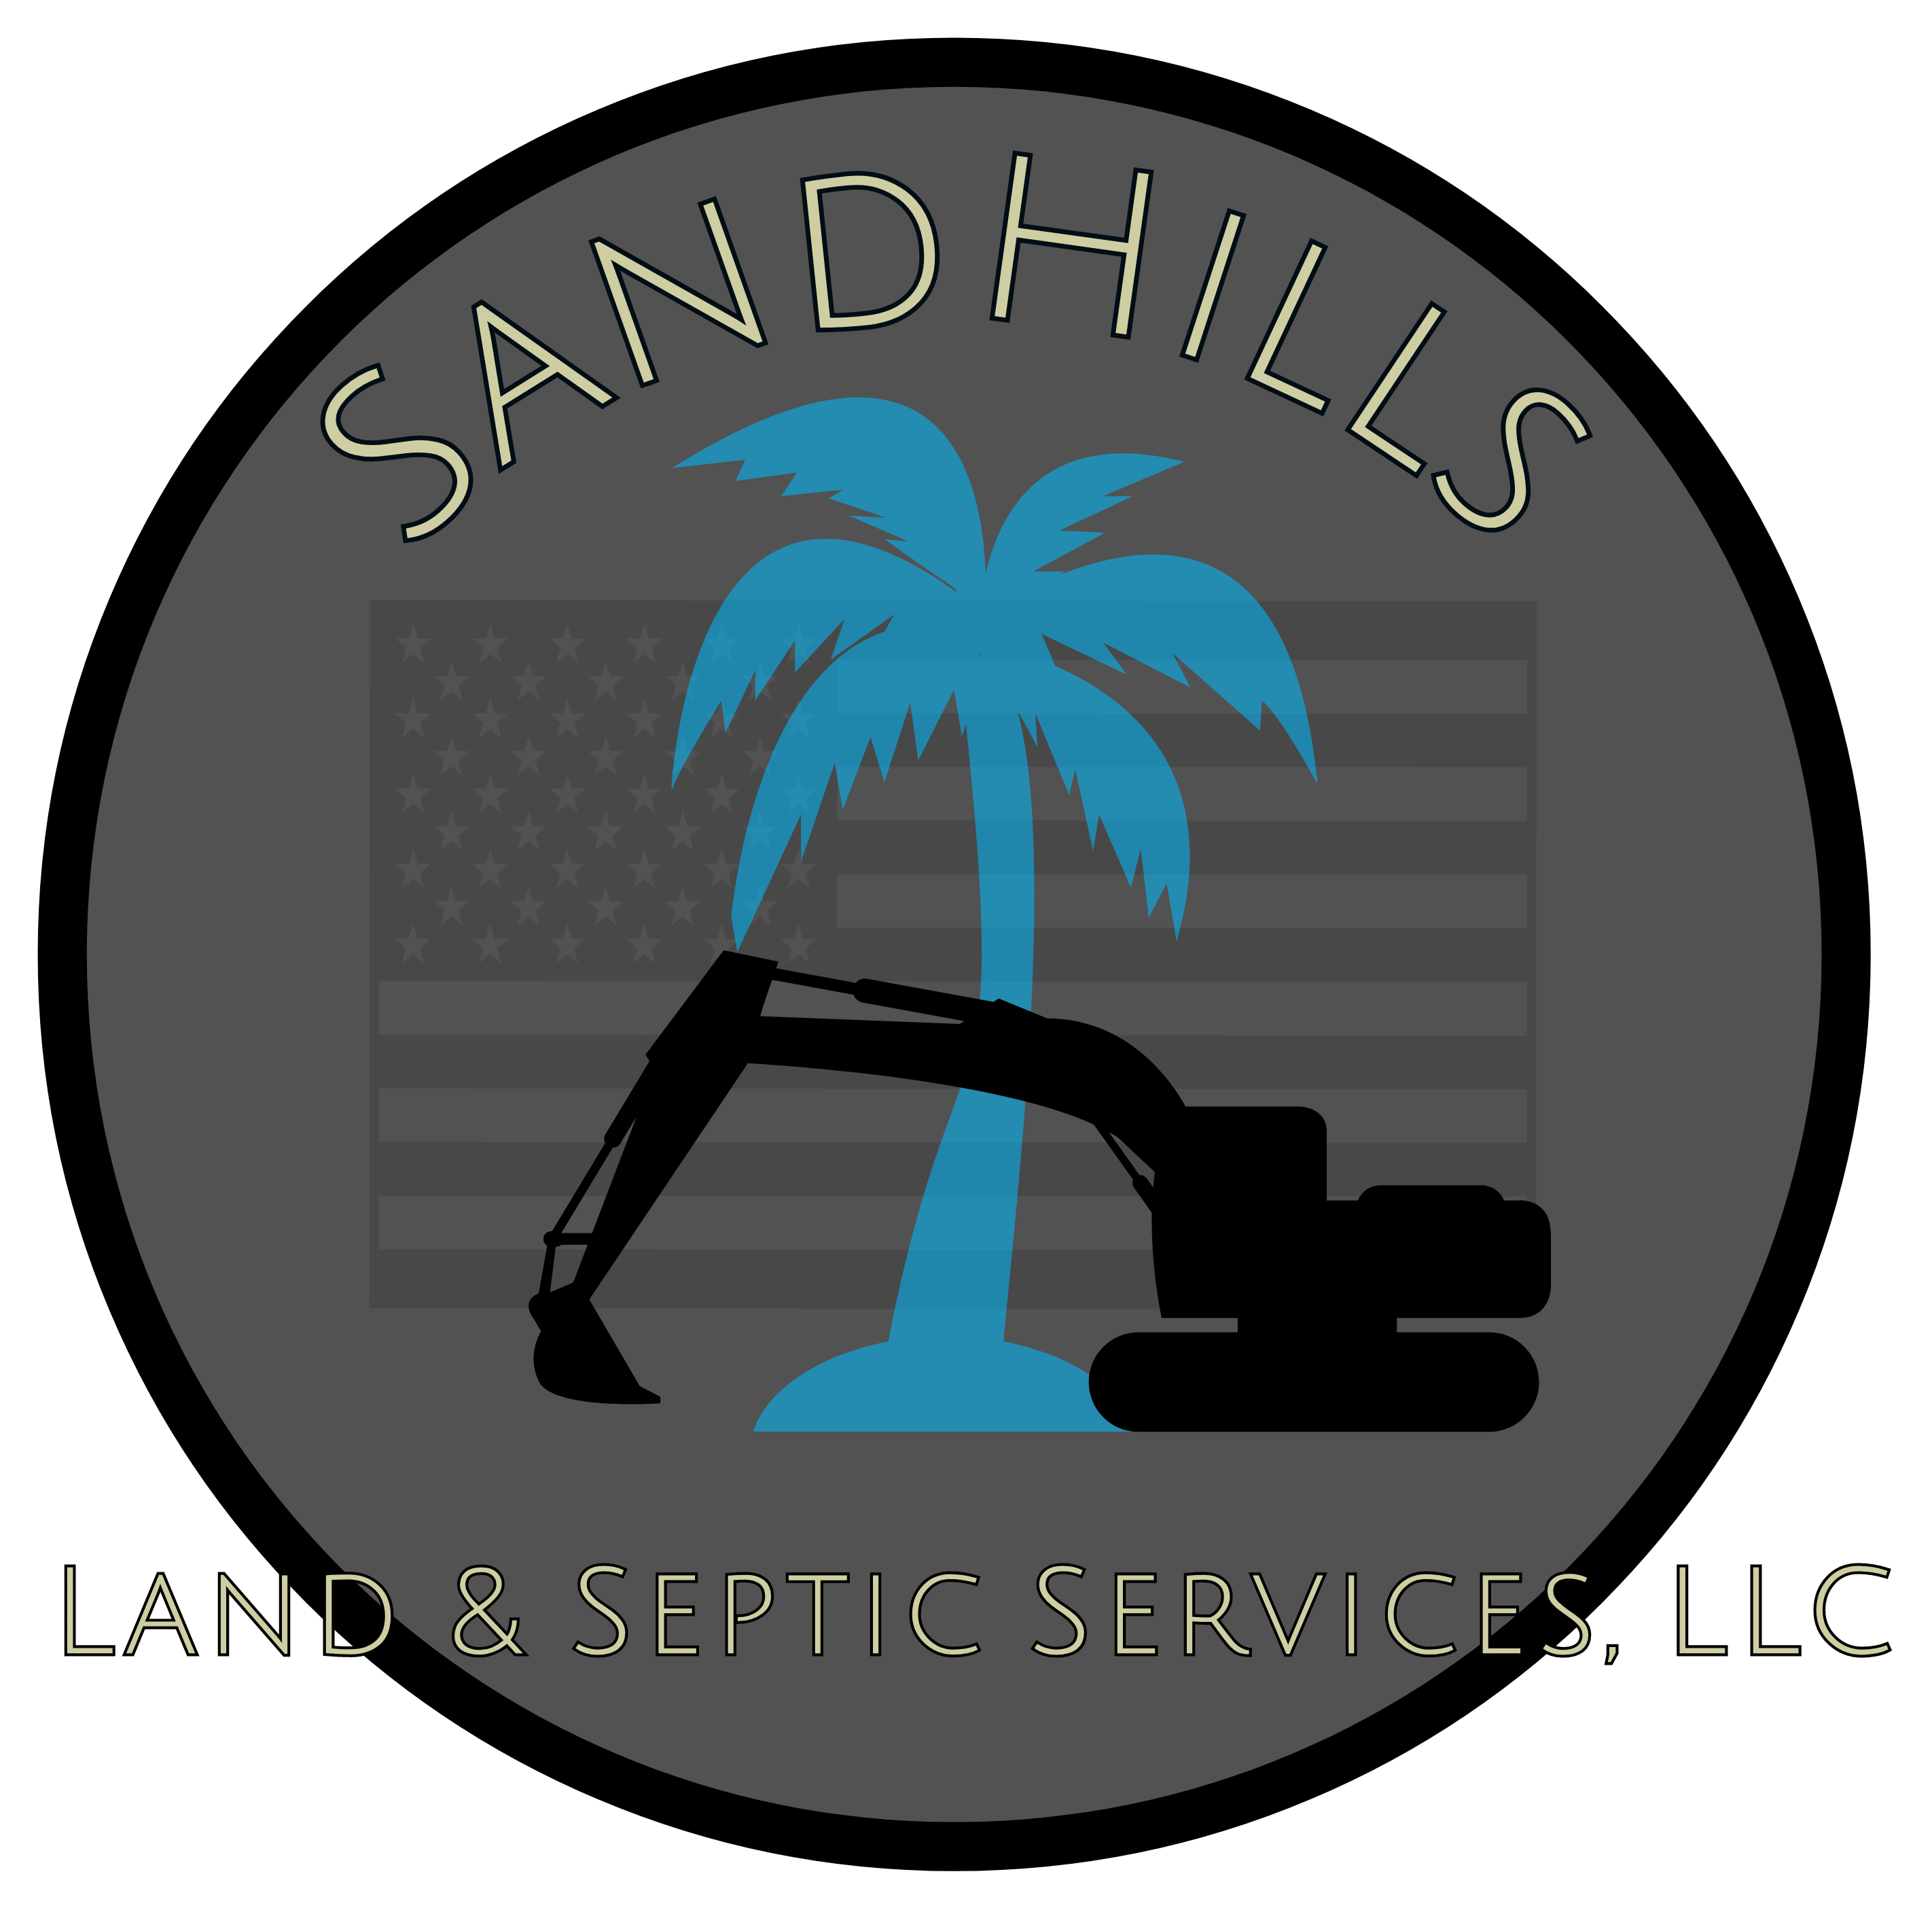 SandHills Land & Septic Services, LLC Logo